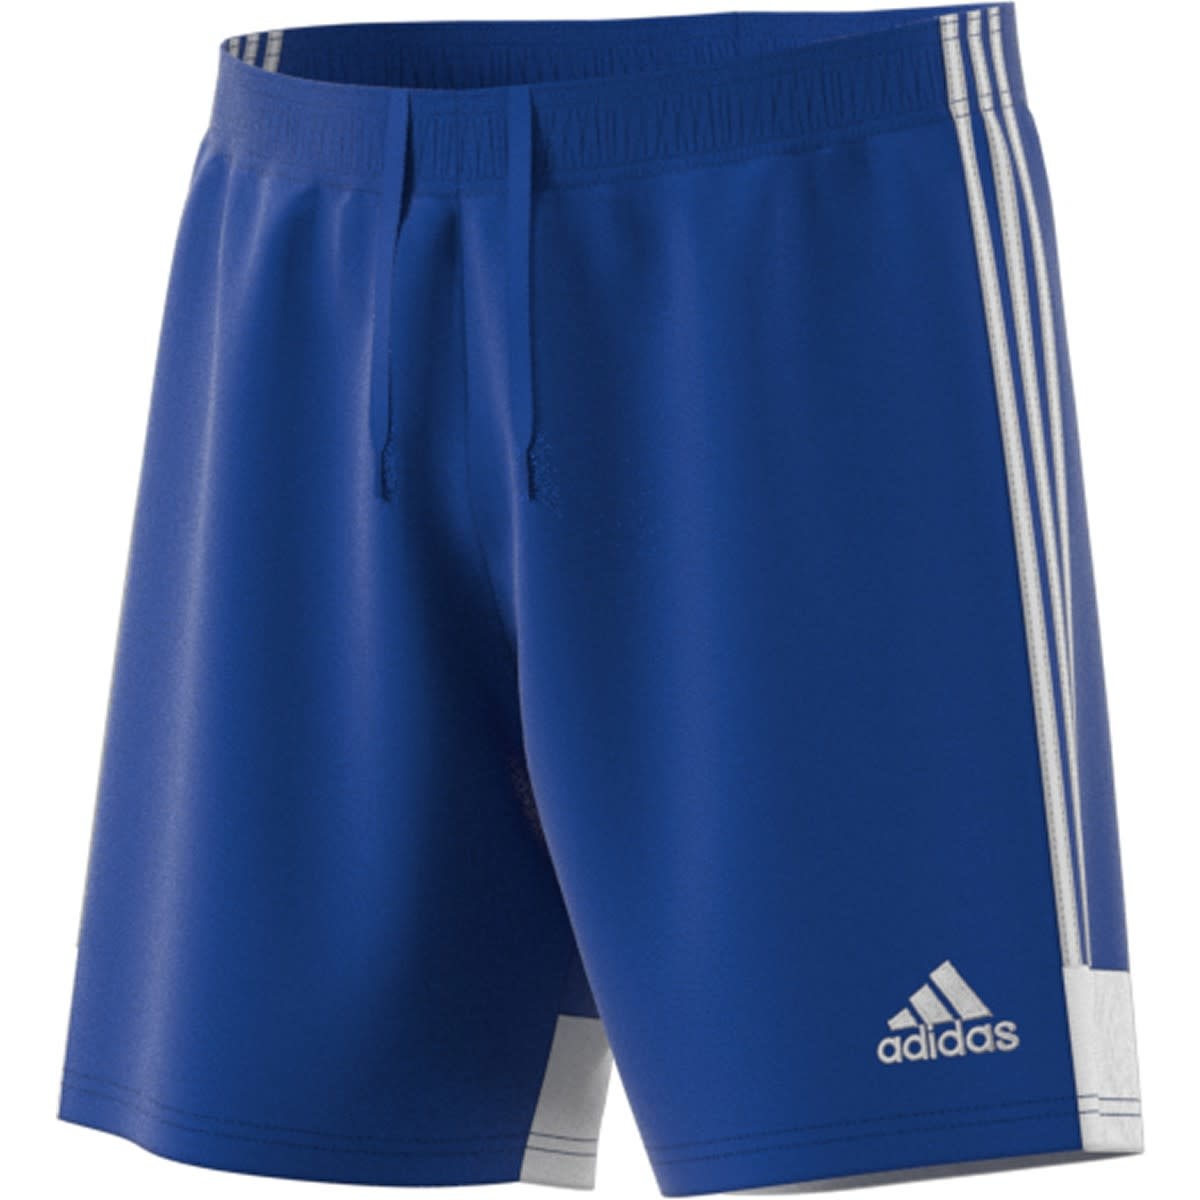 adidas climalite youth soccer shorts